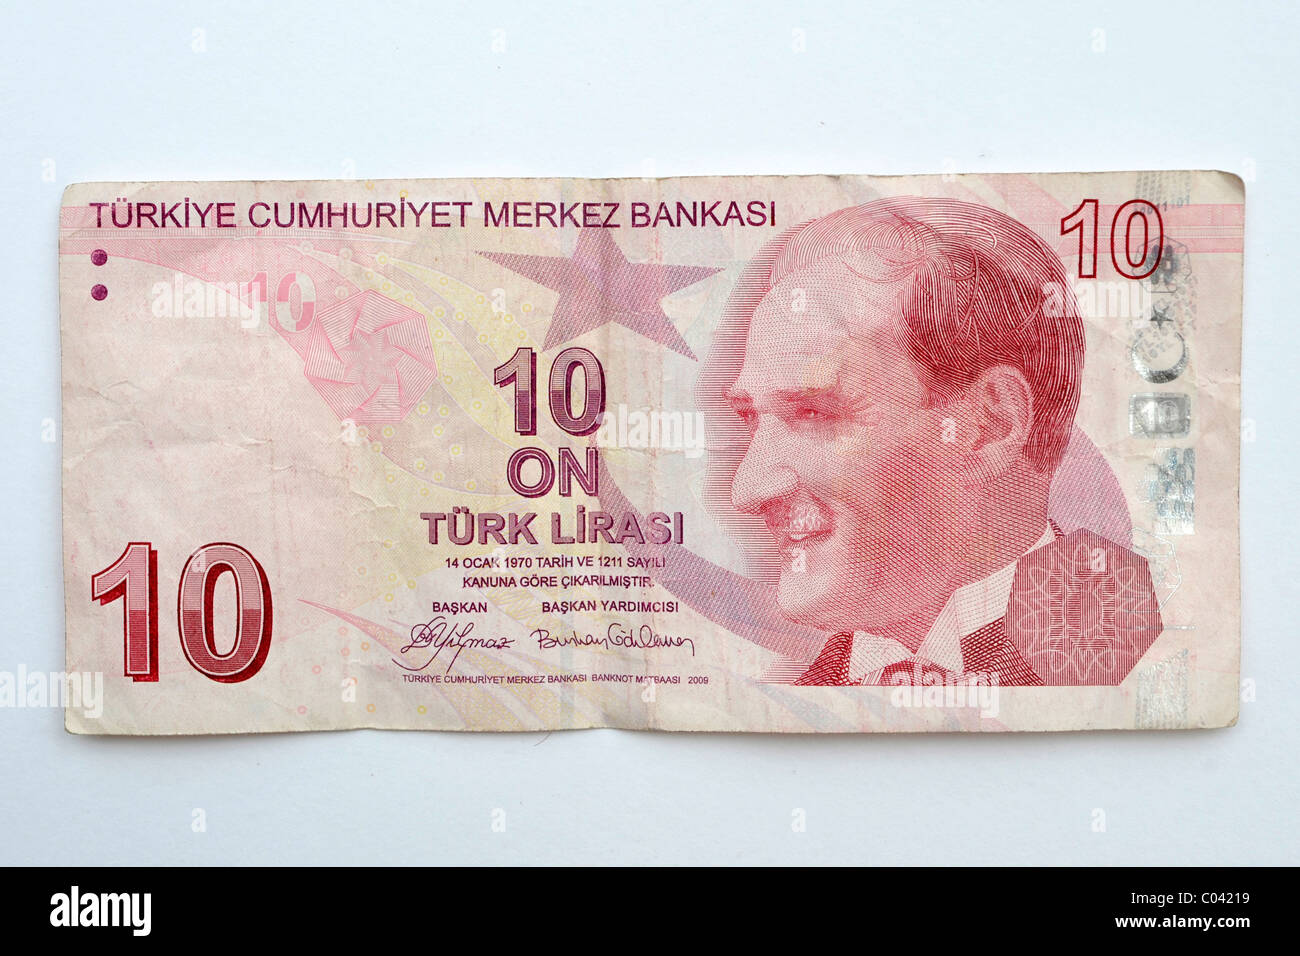 10 Lira, banco turco nota de 2009. Foto de stock